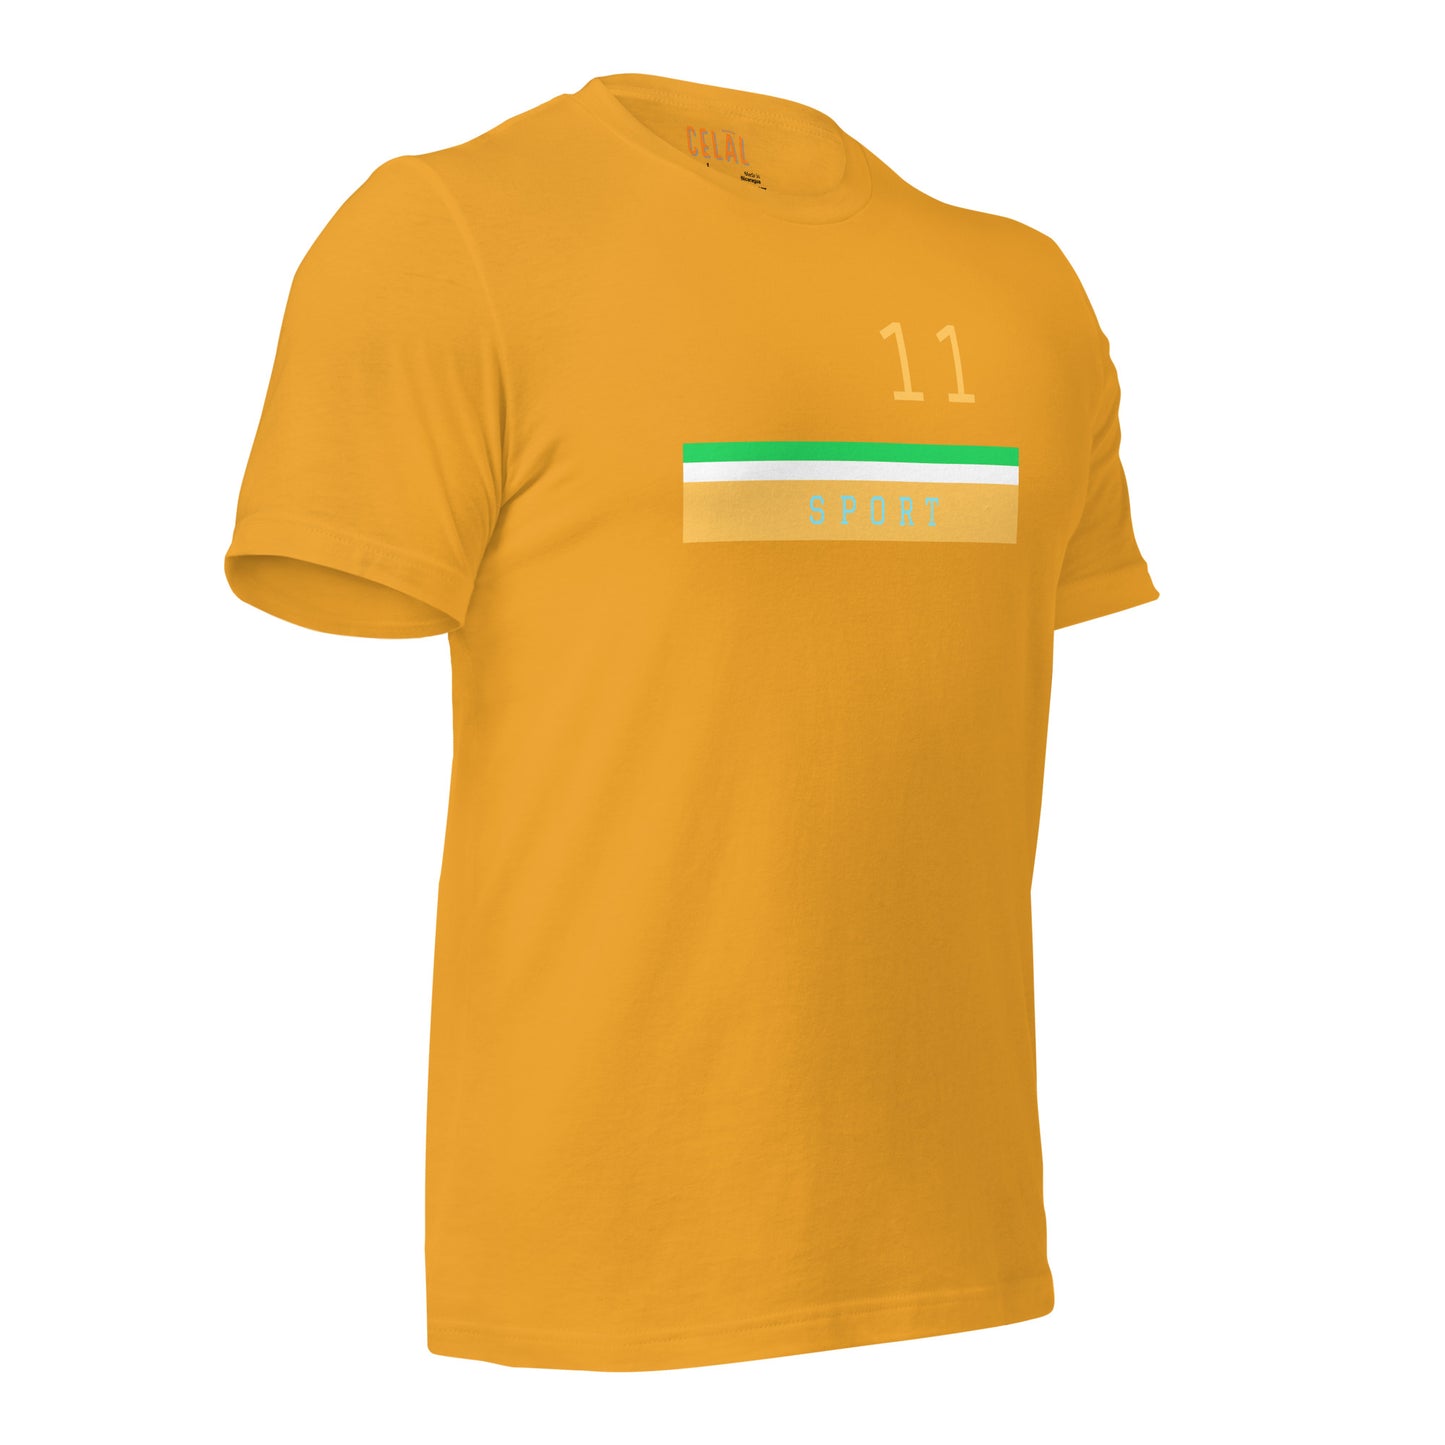 11 Unisex t-shirt